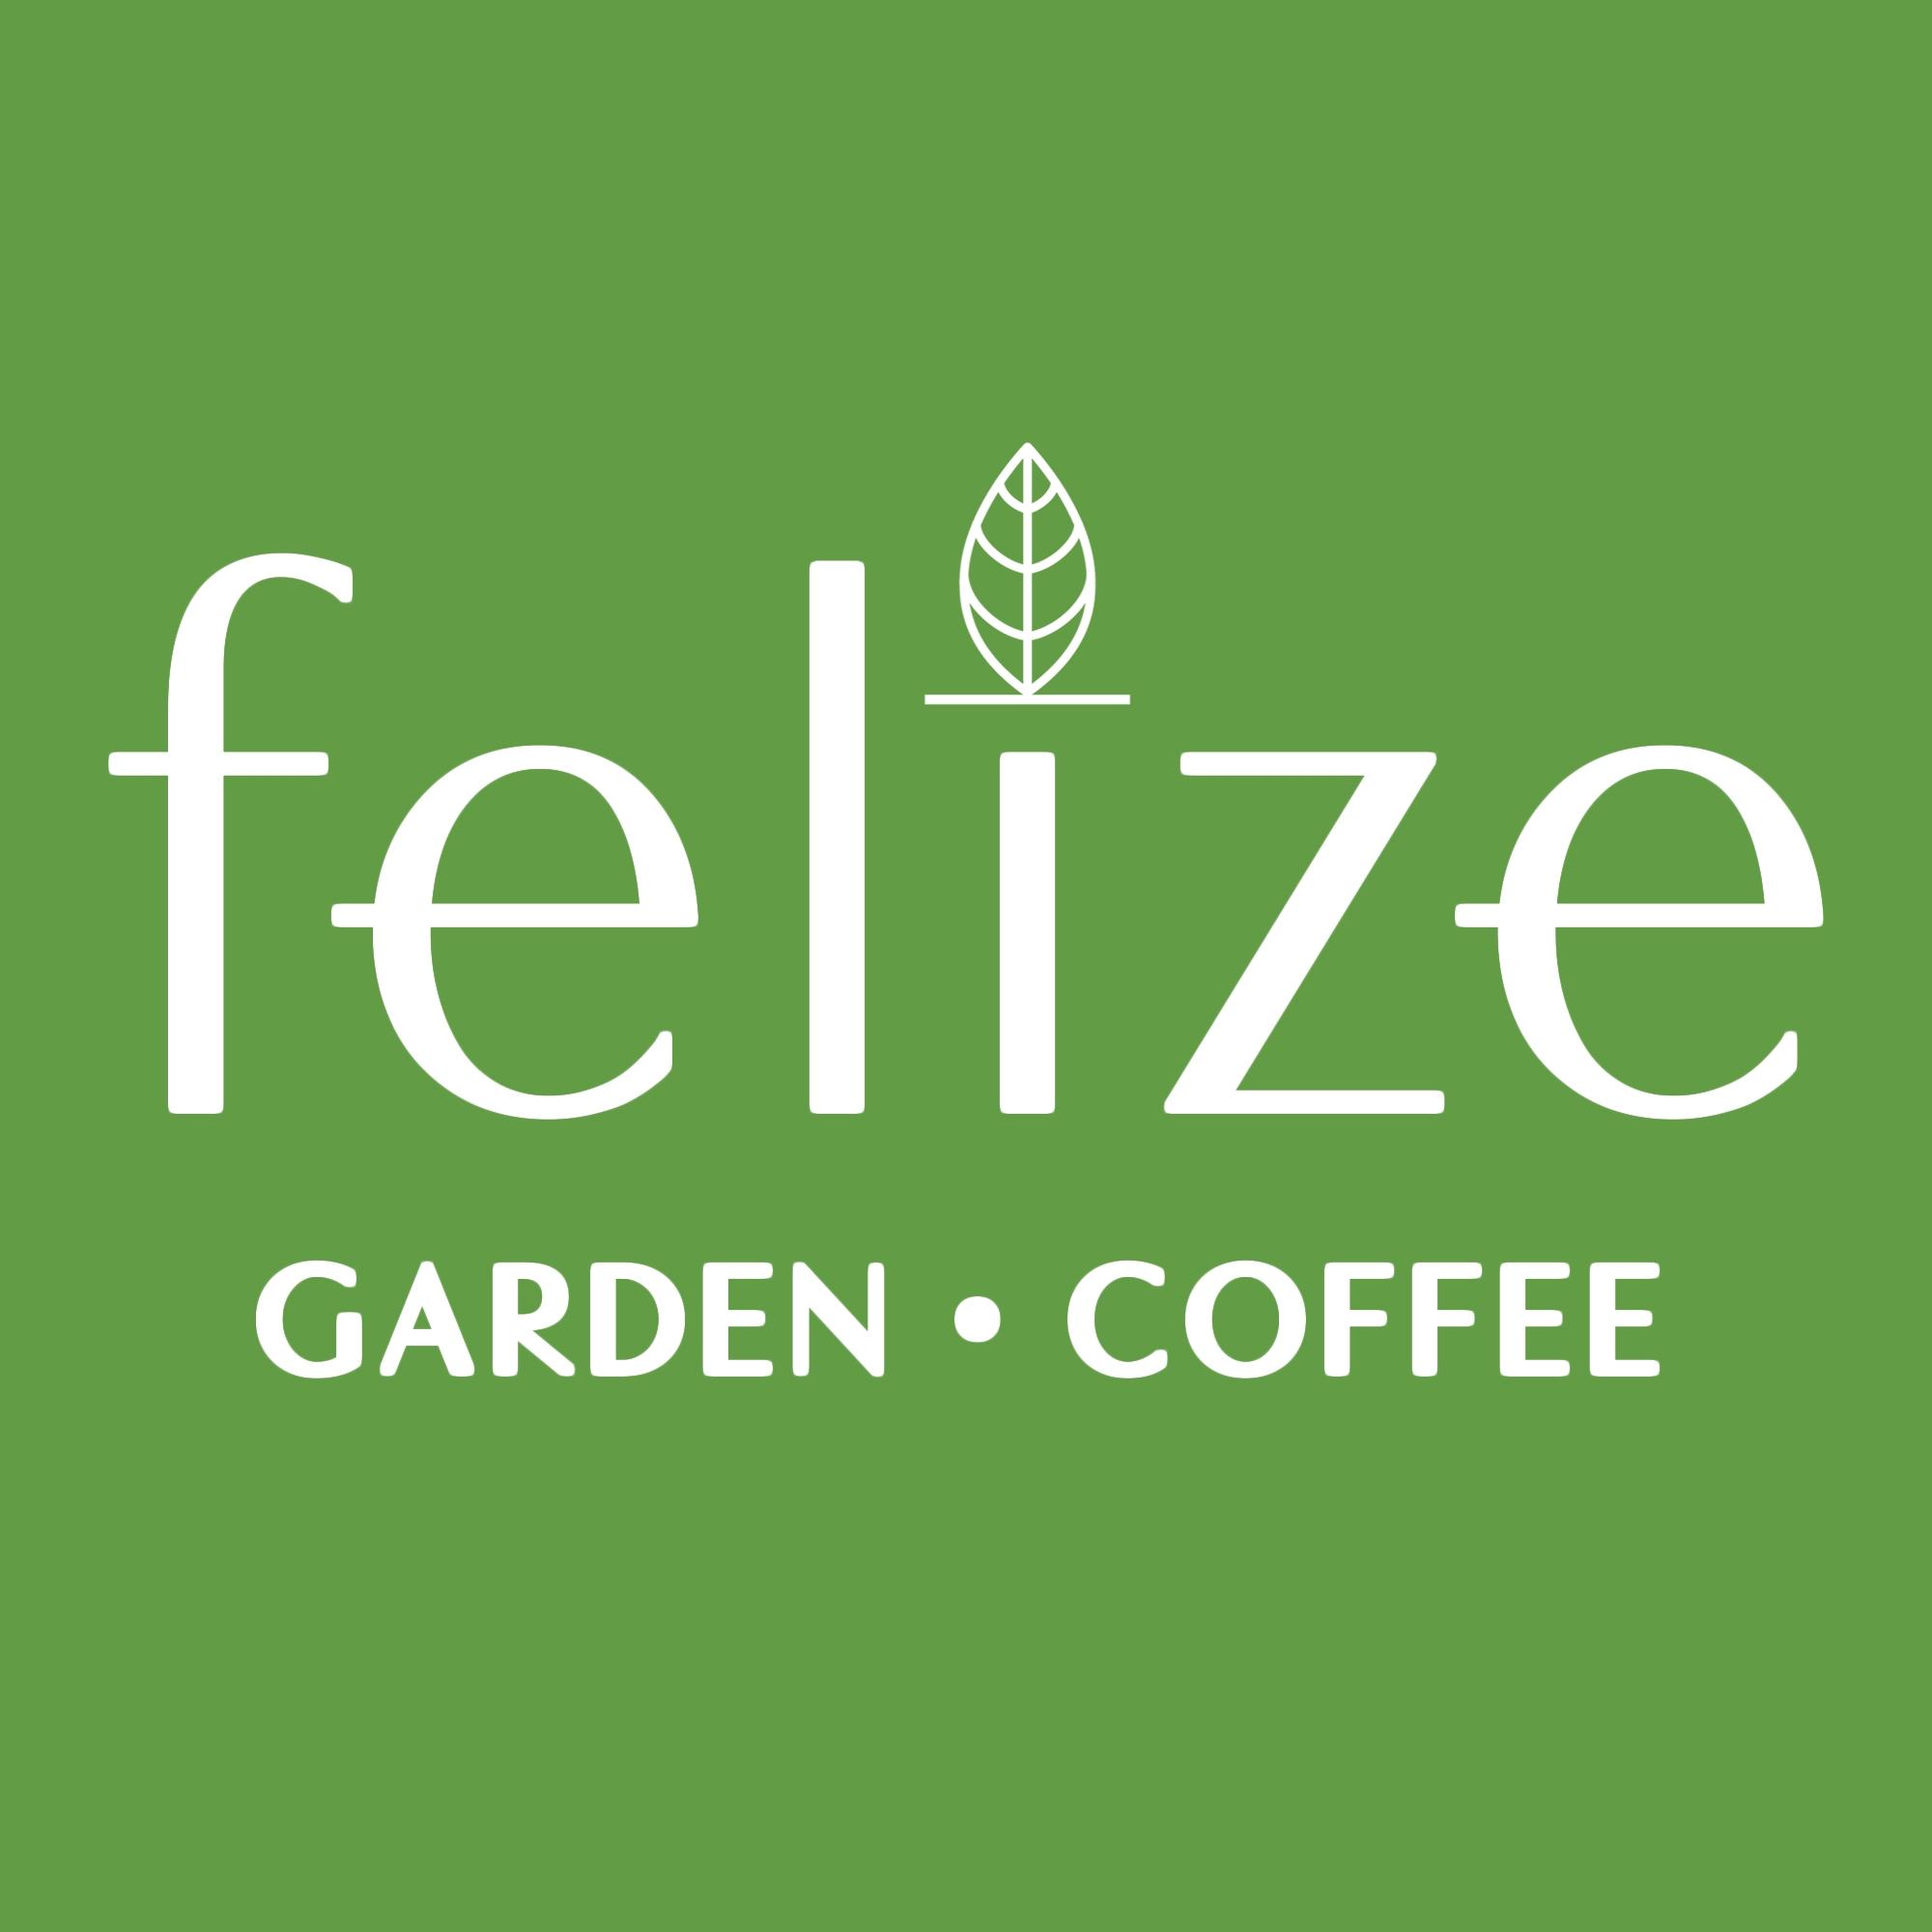 Felize Garden - Coffee 